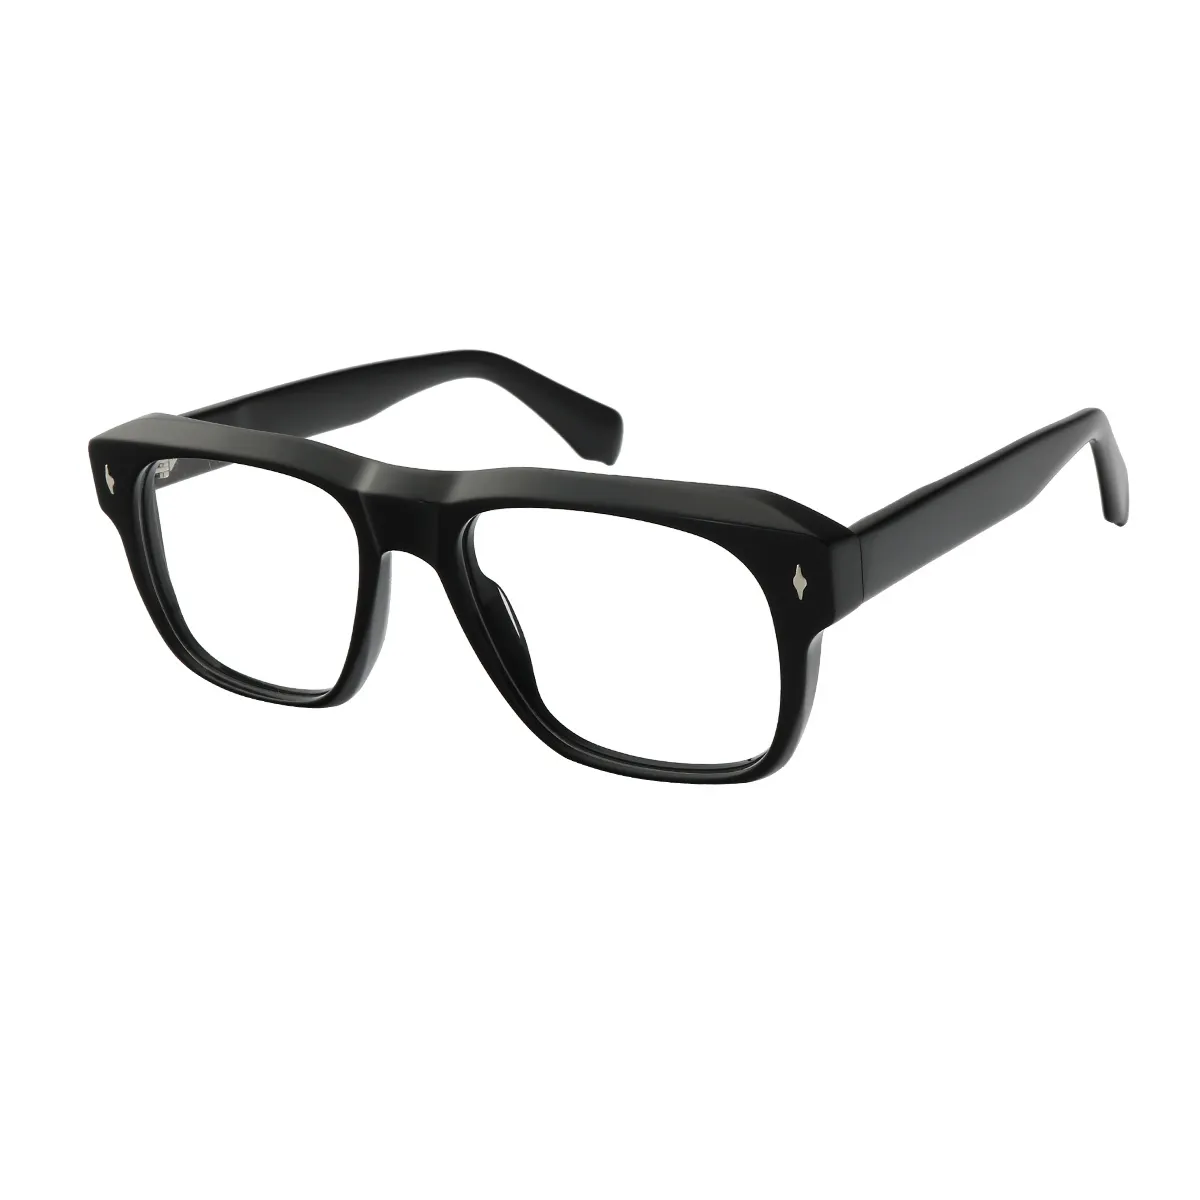 Fashion Square Black Eyeglasses for Women & Men